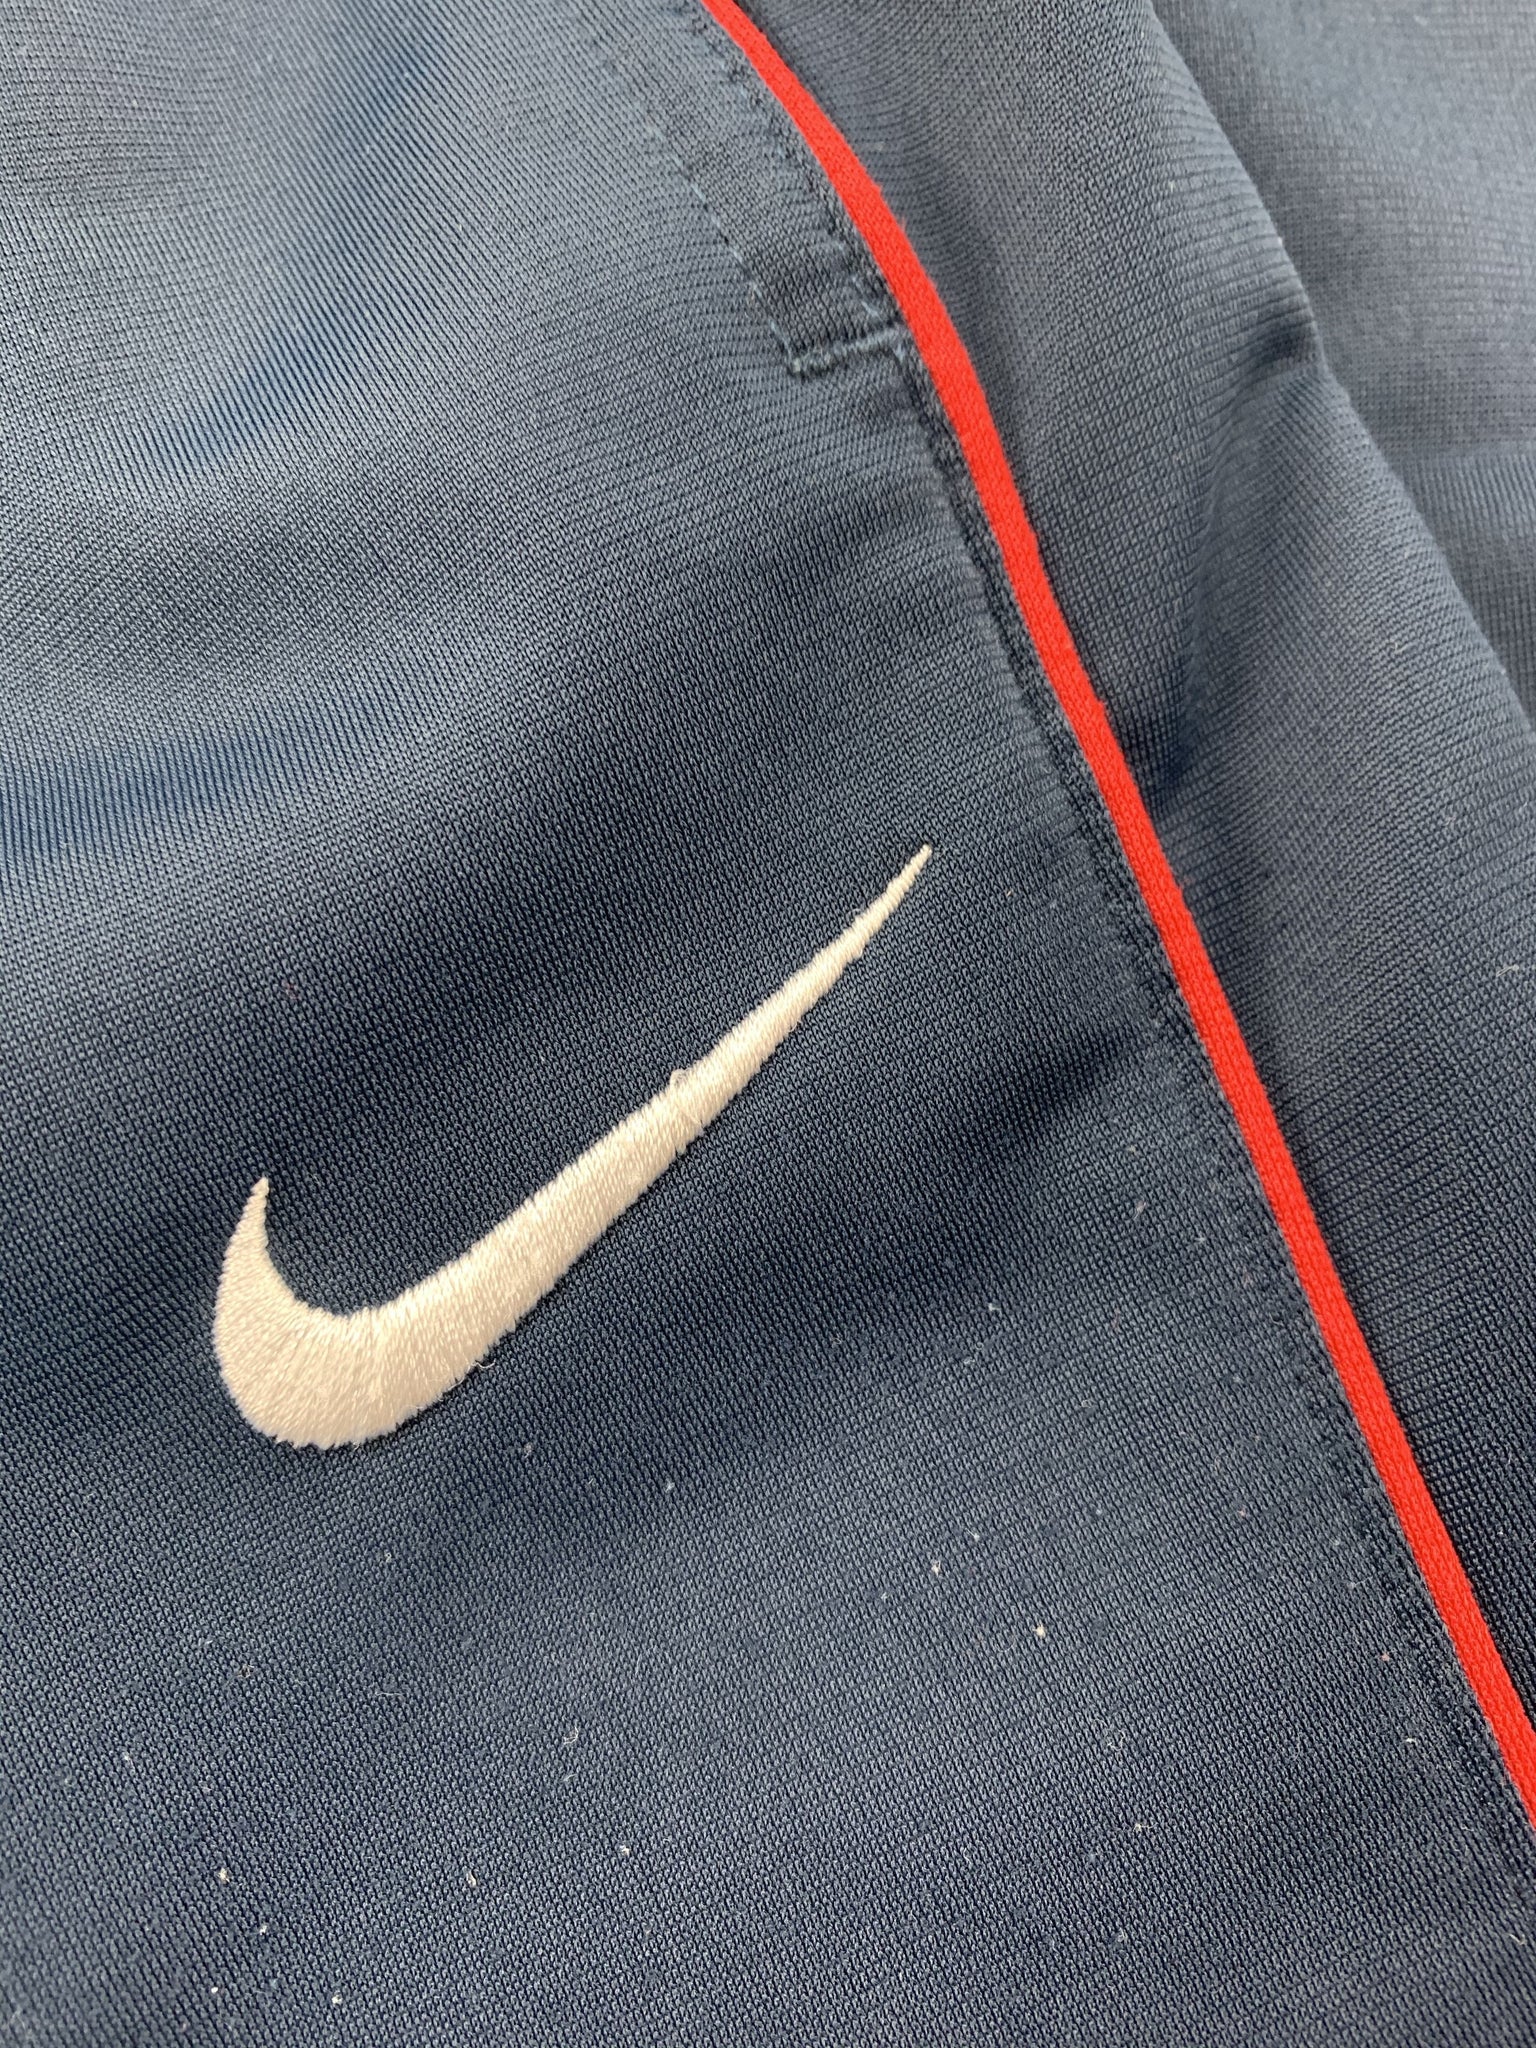 Nike - Vintage Style Track Pants on Designer Wardrobe